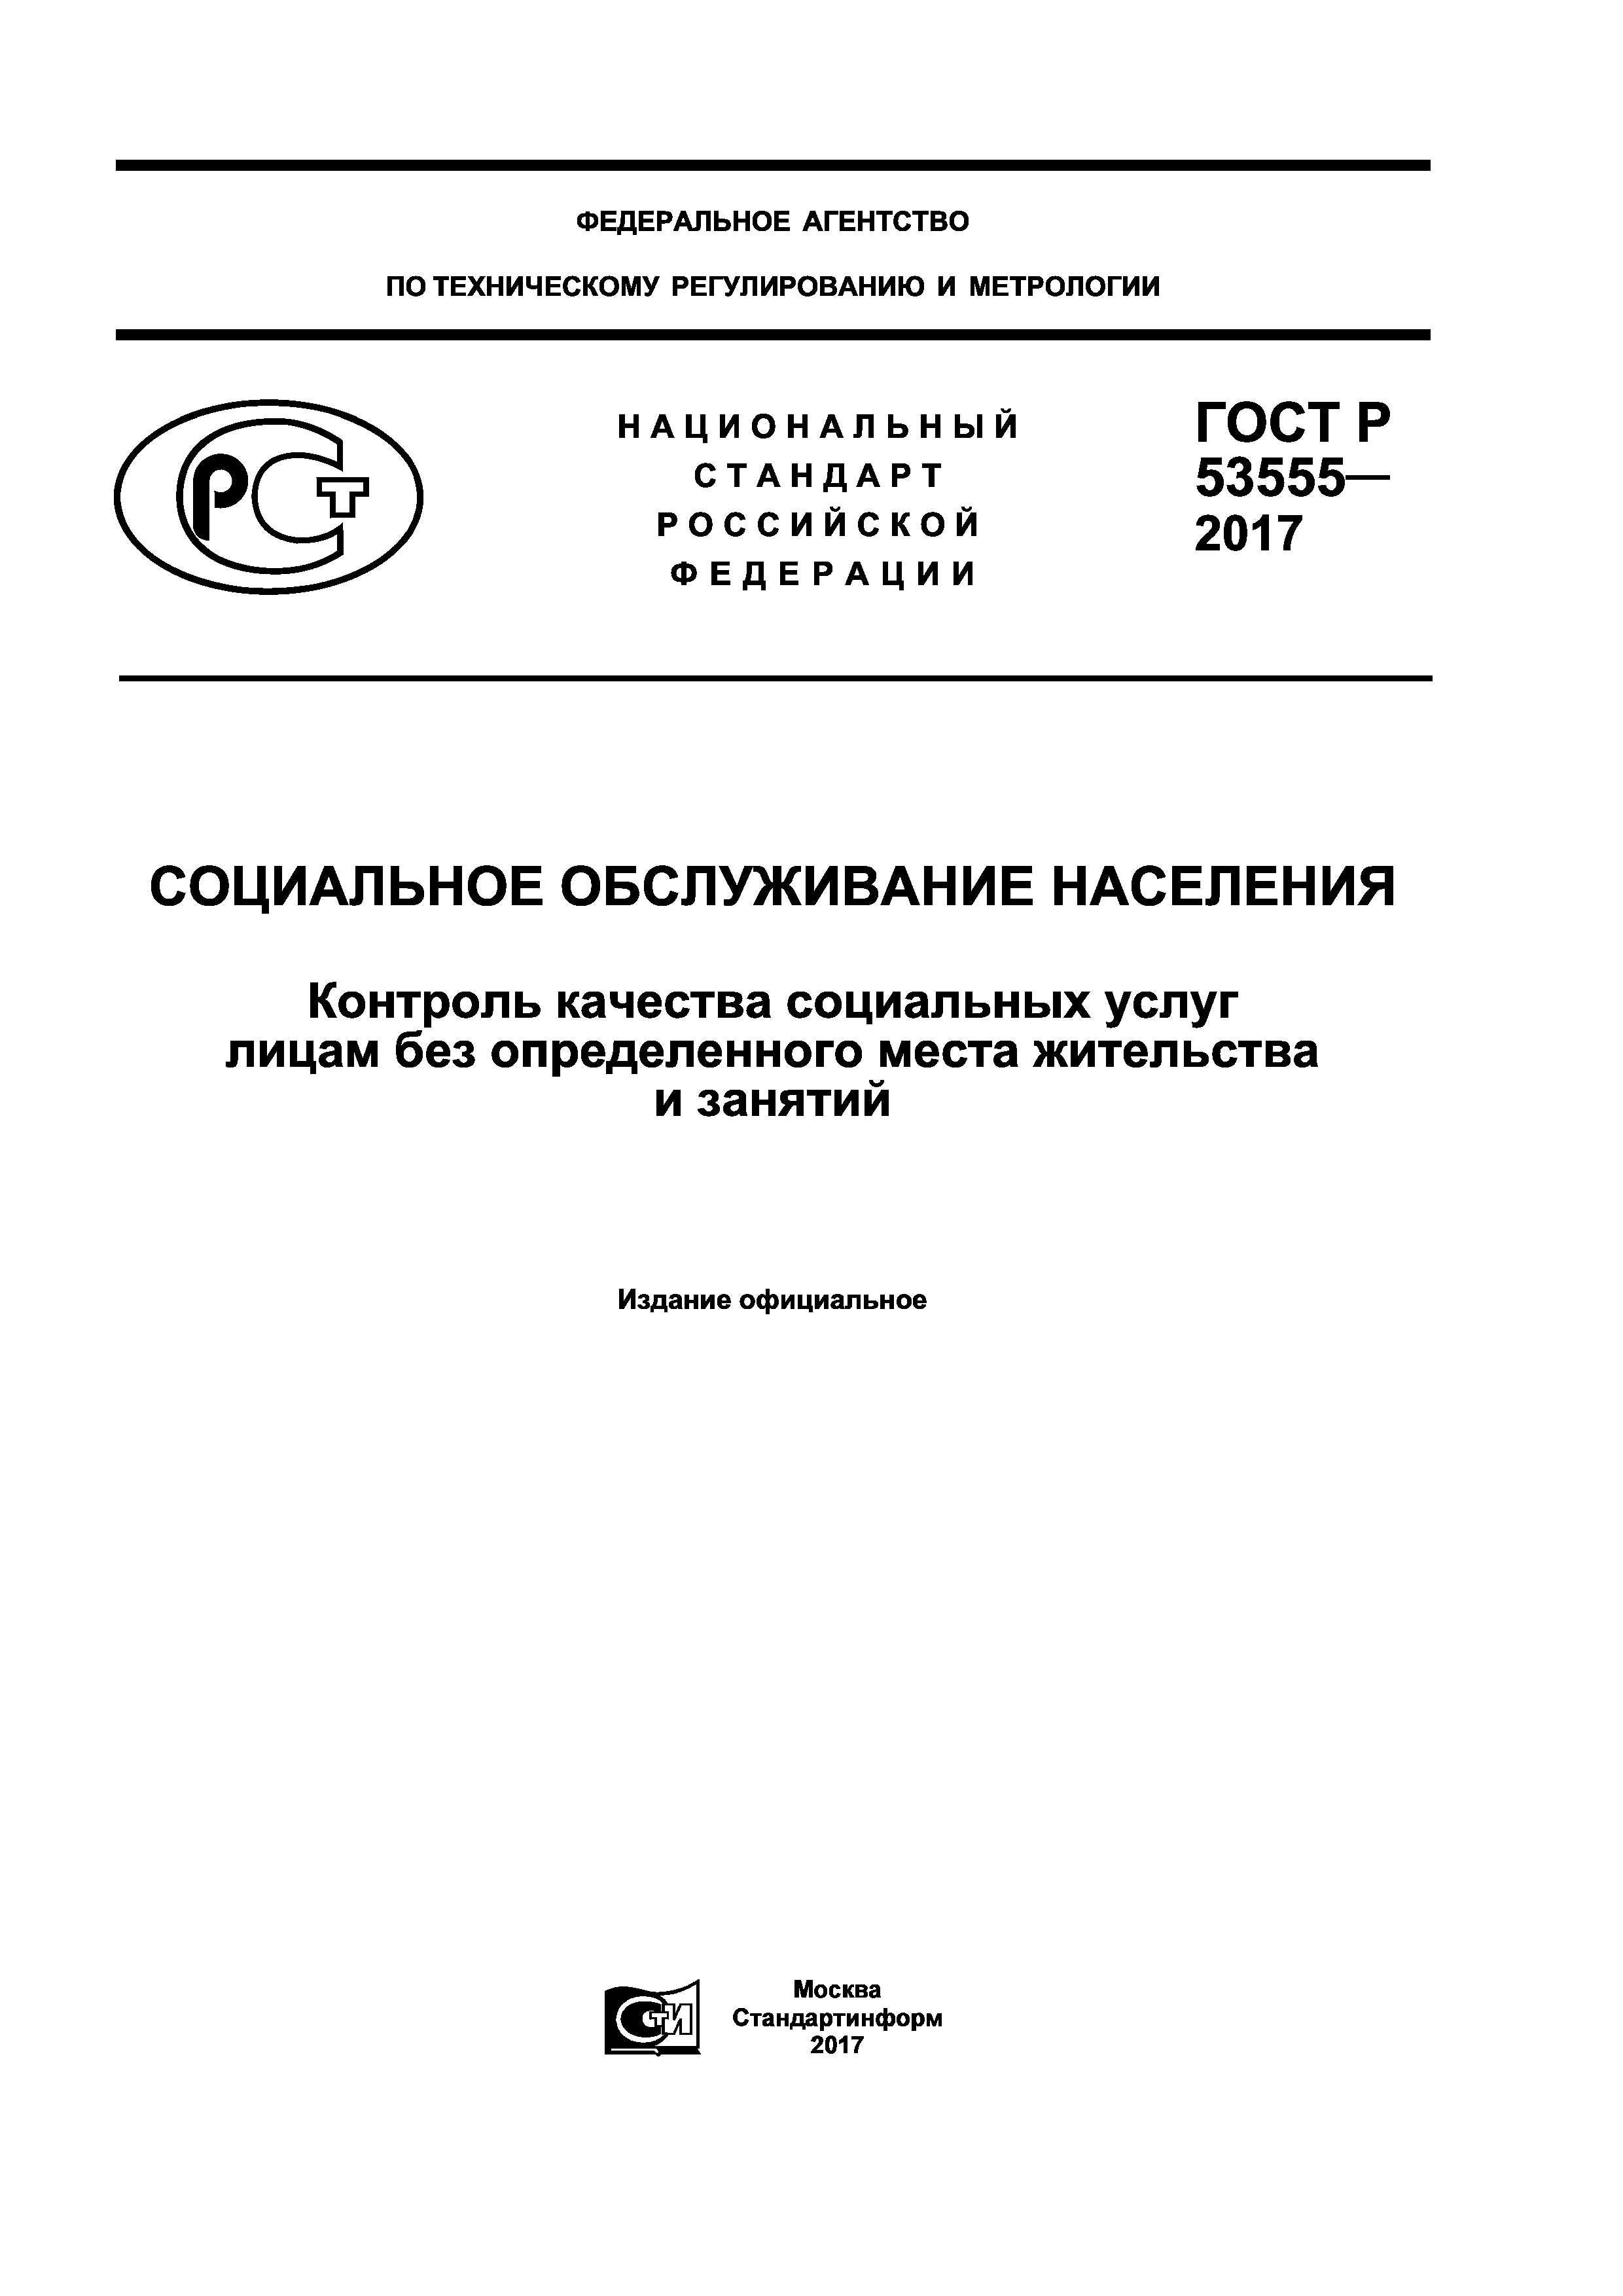 ГОСТ Р 53555-2017